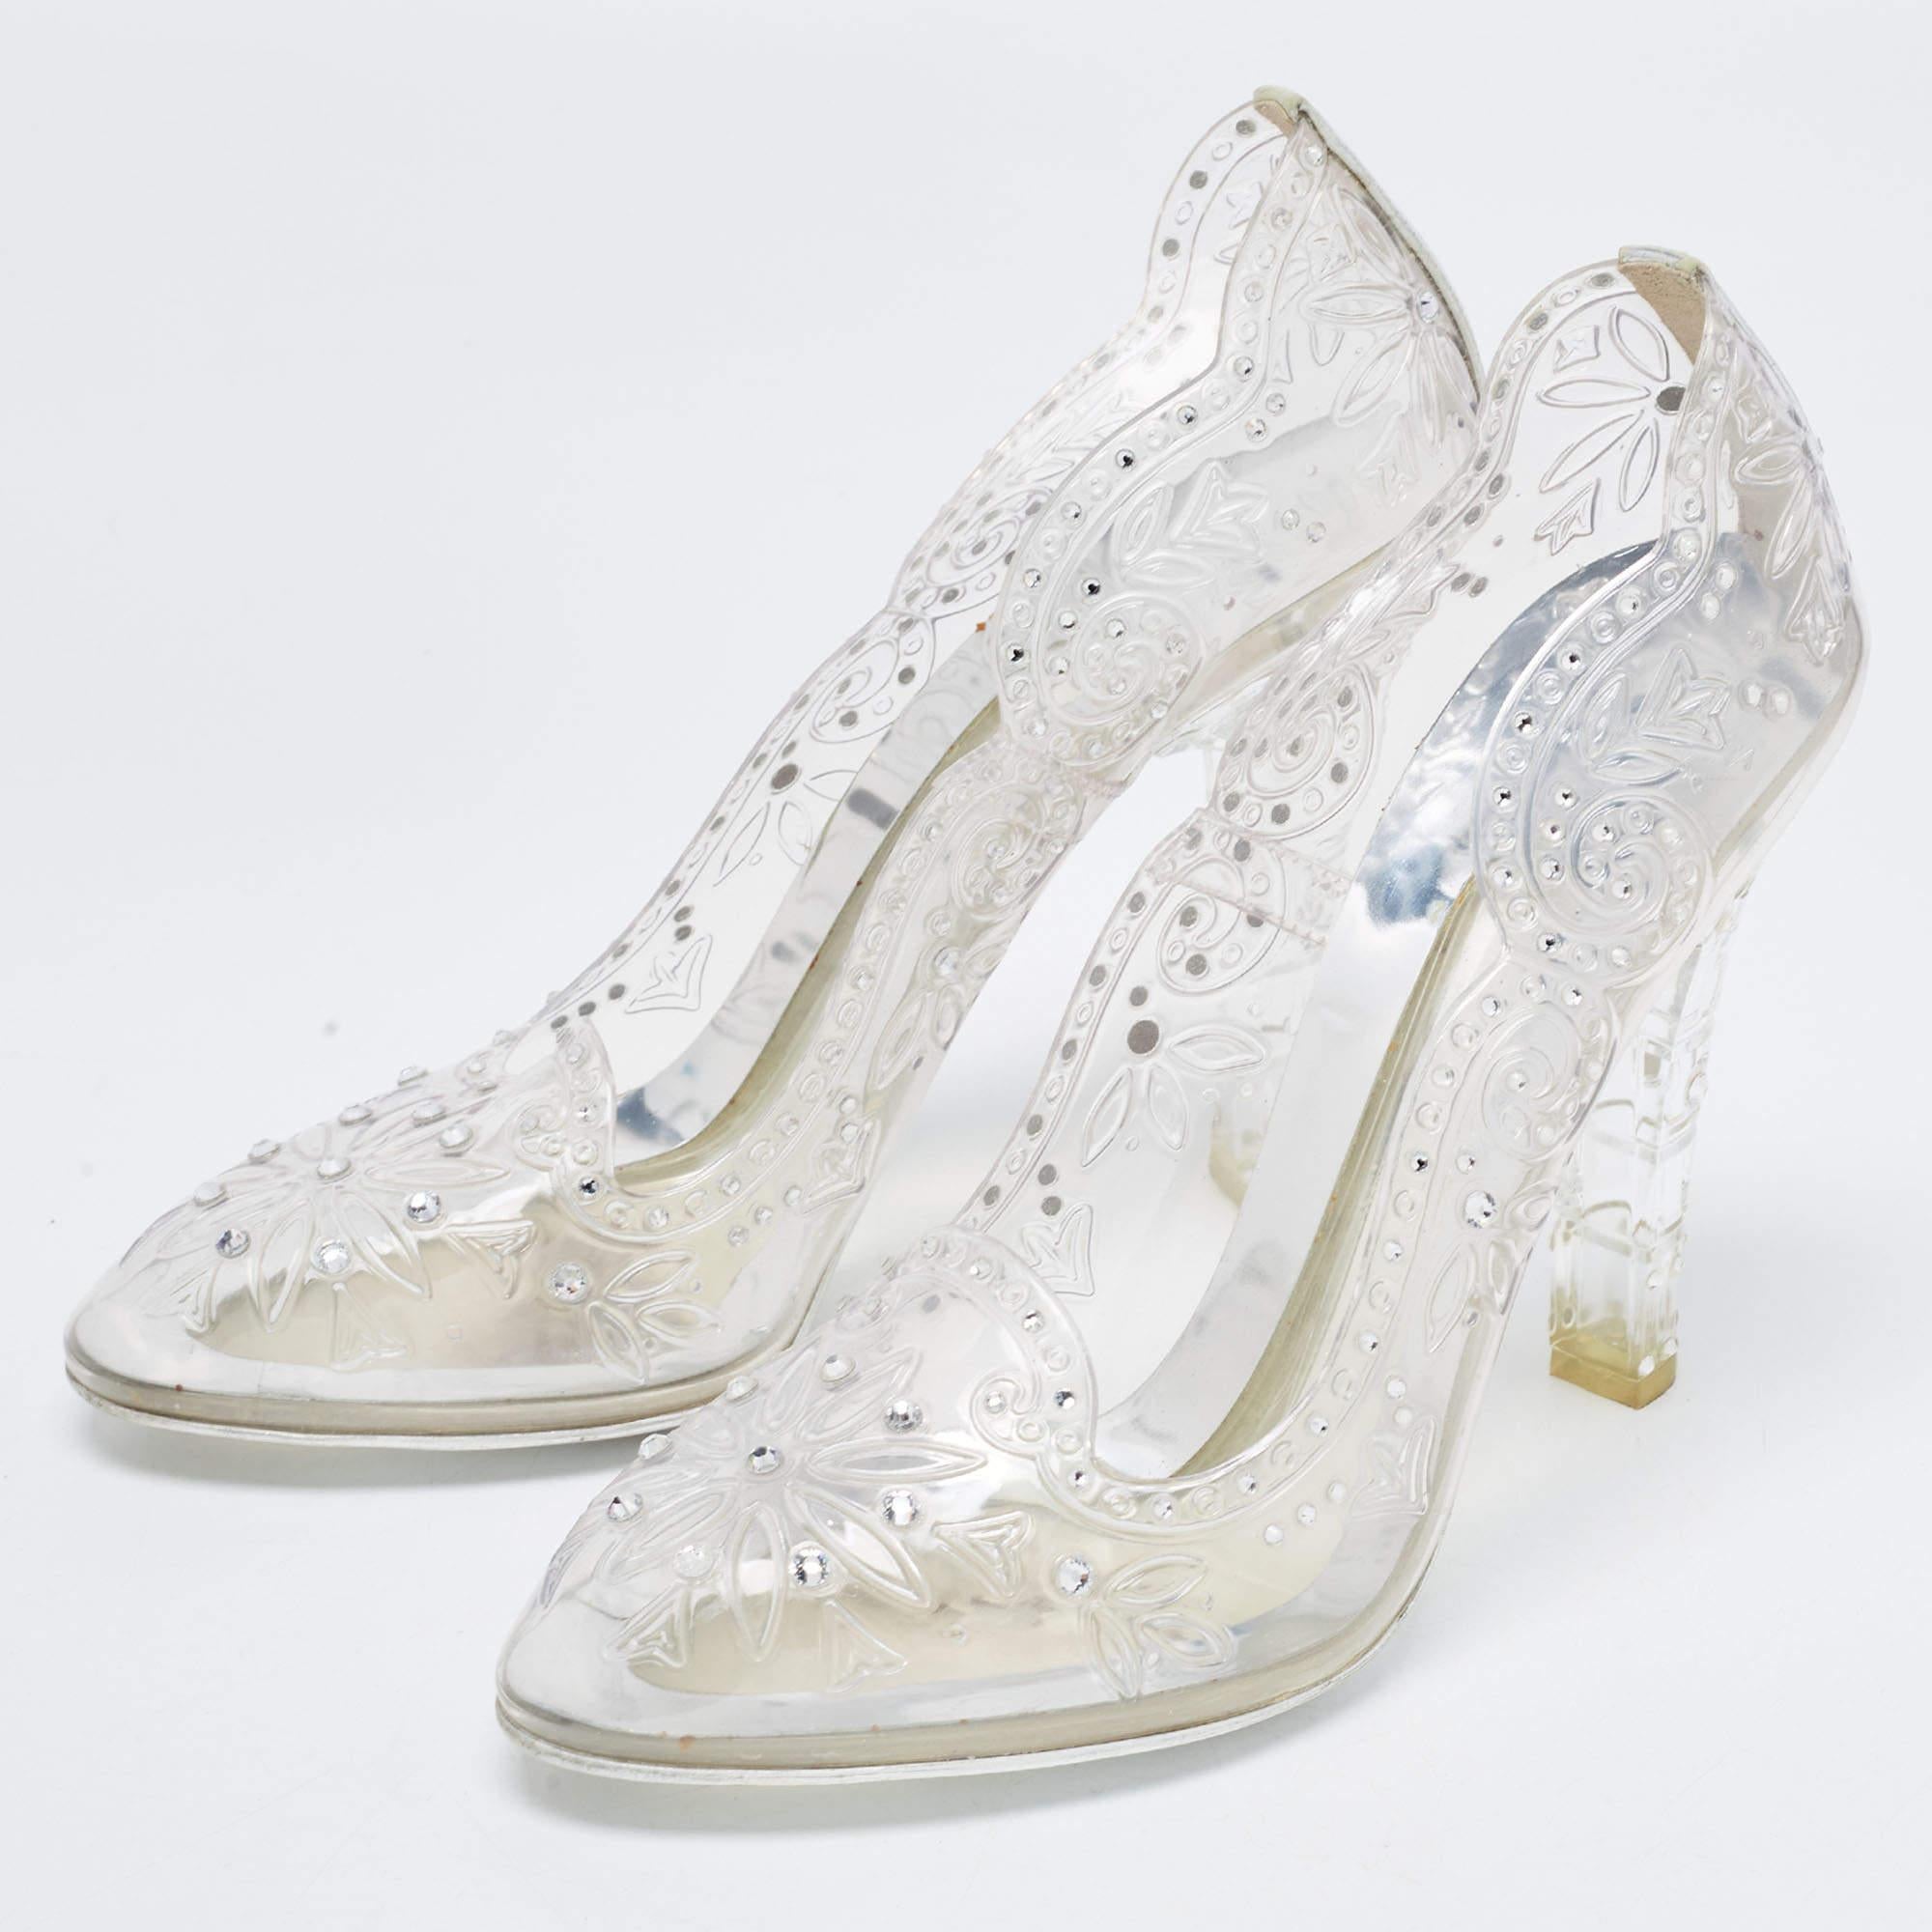 Dolce & Gabbana Silver PVC Crystal Embellished Cinderella Pumps Size 38.5 5